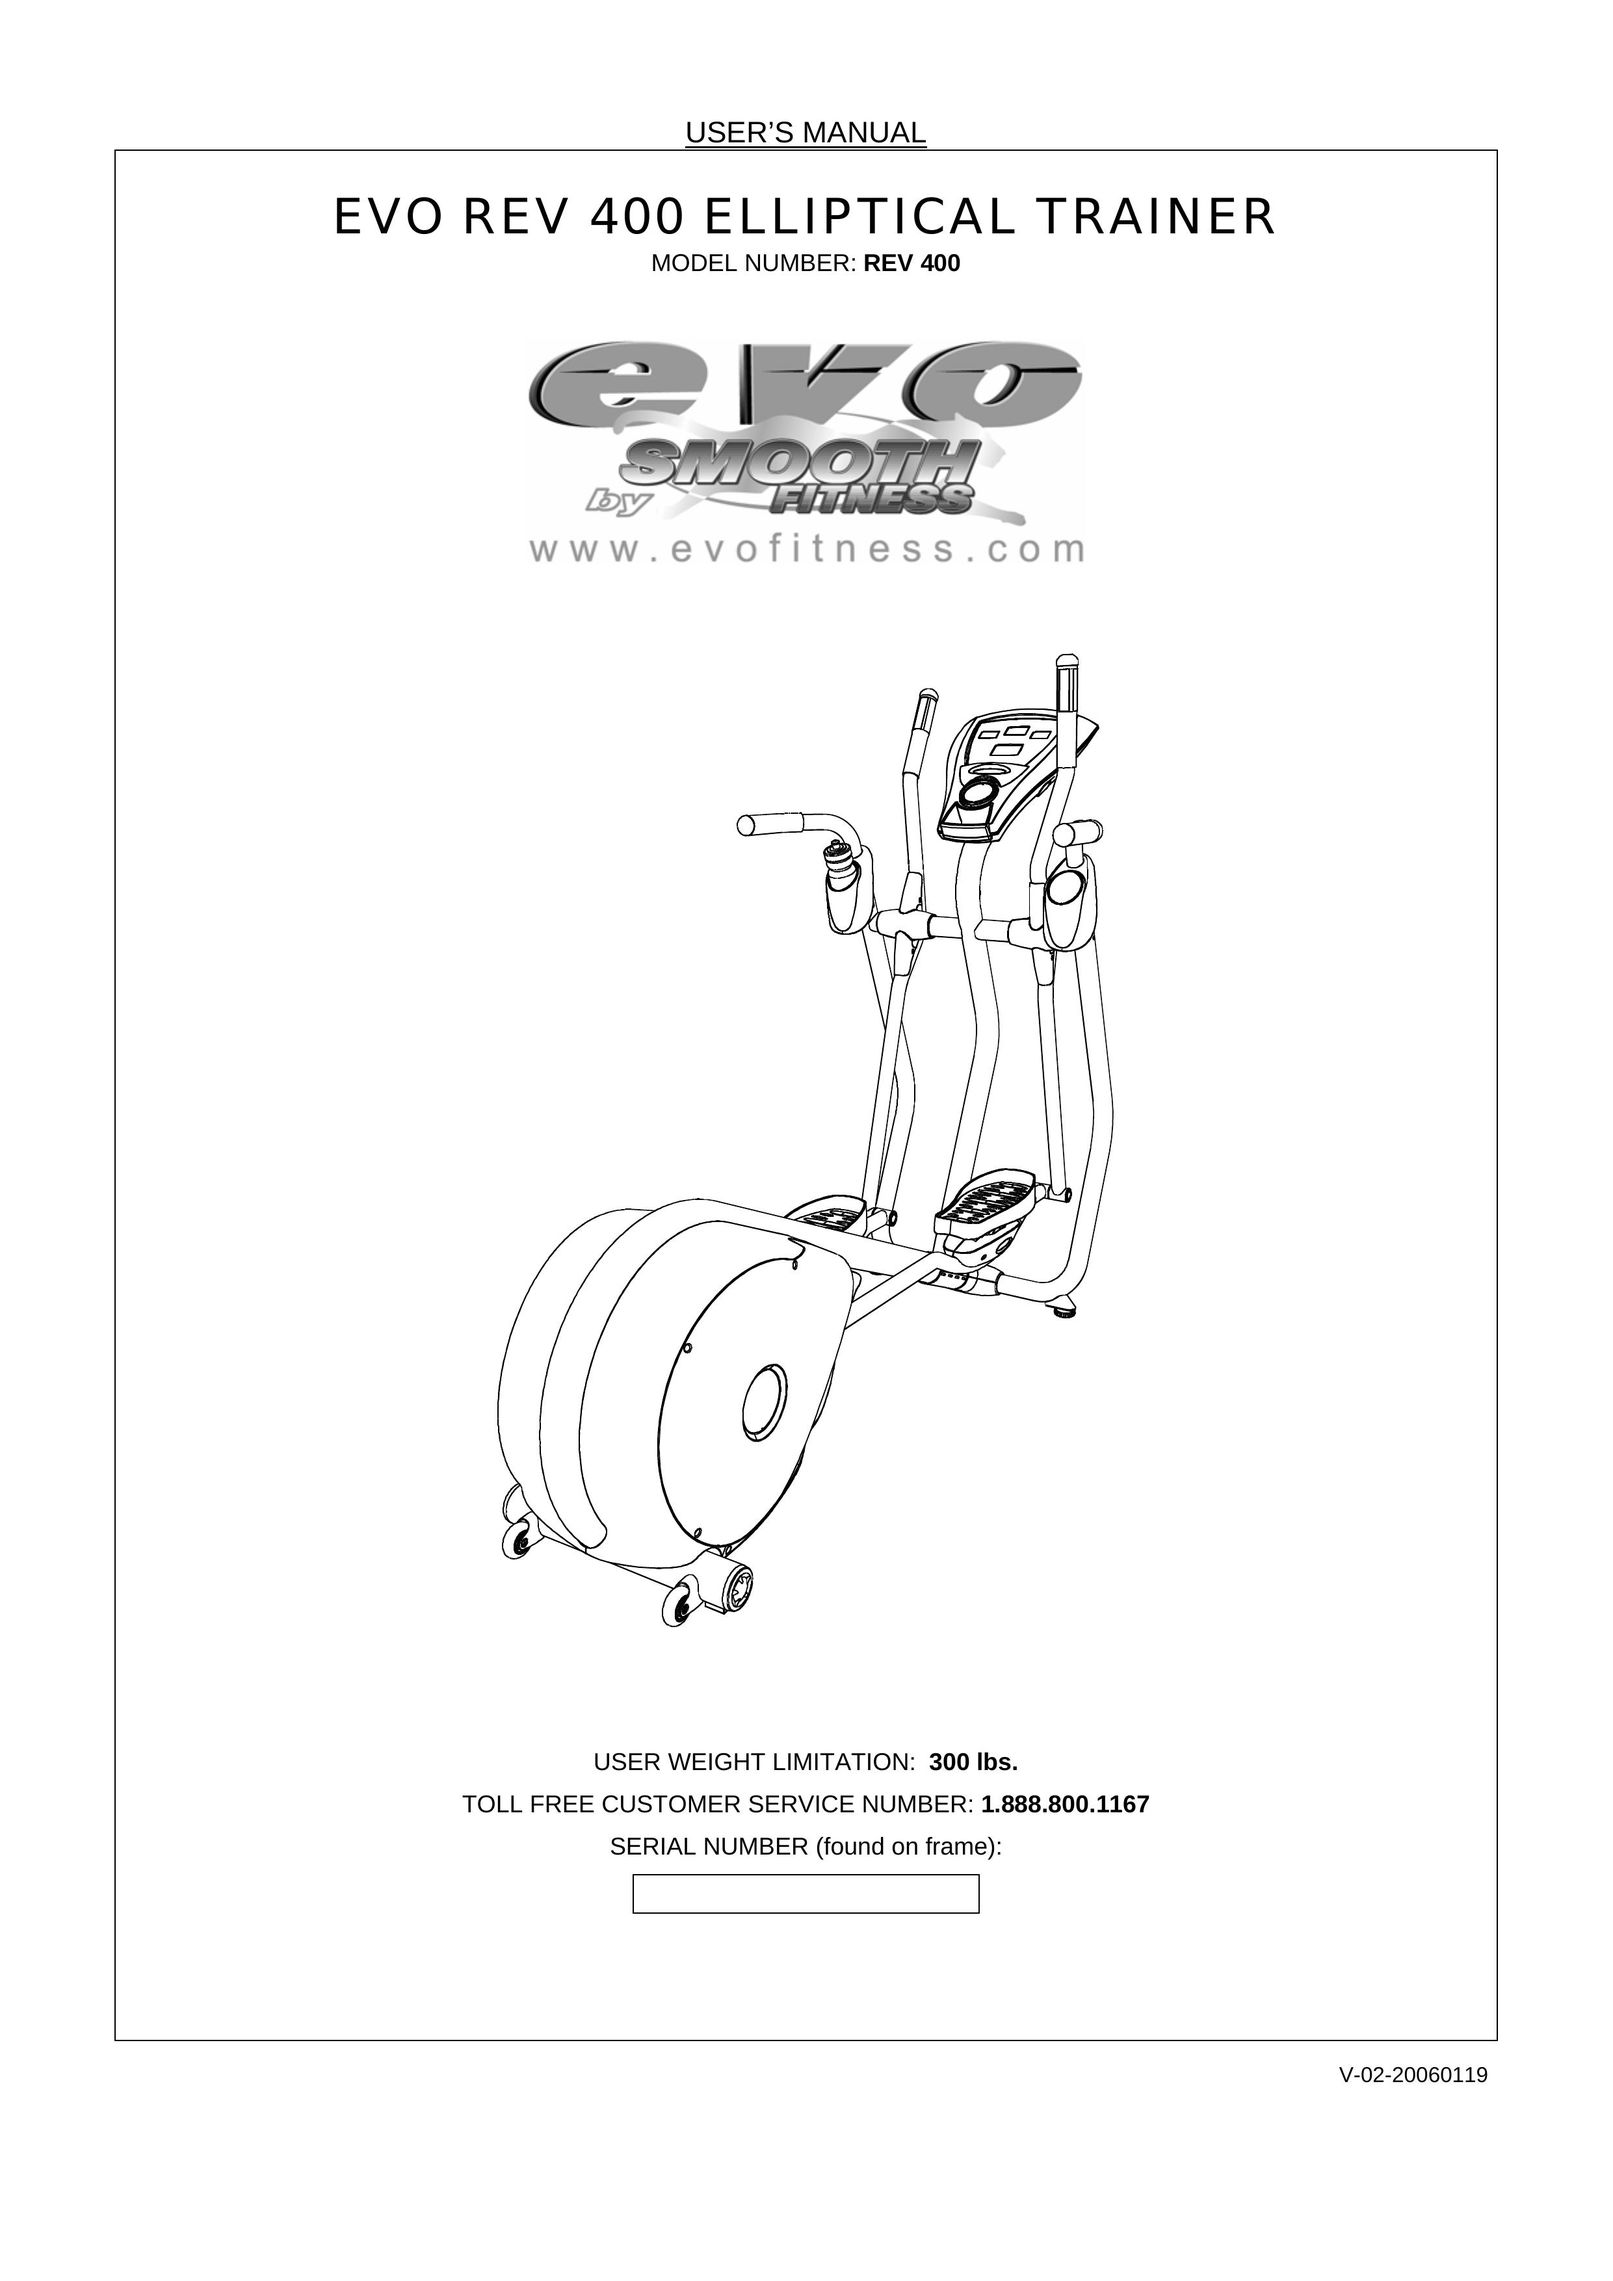 Evo Fitness REV 400 Elliptical Trainer User Manual